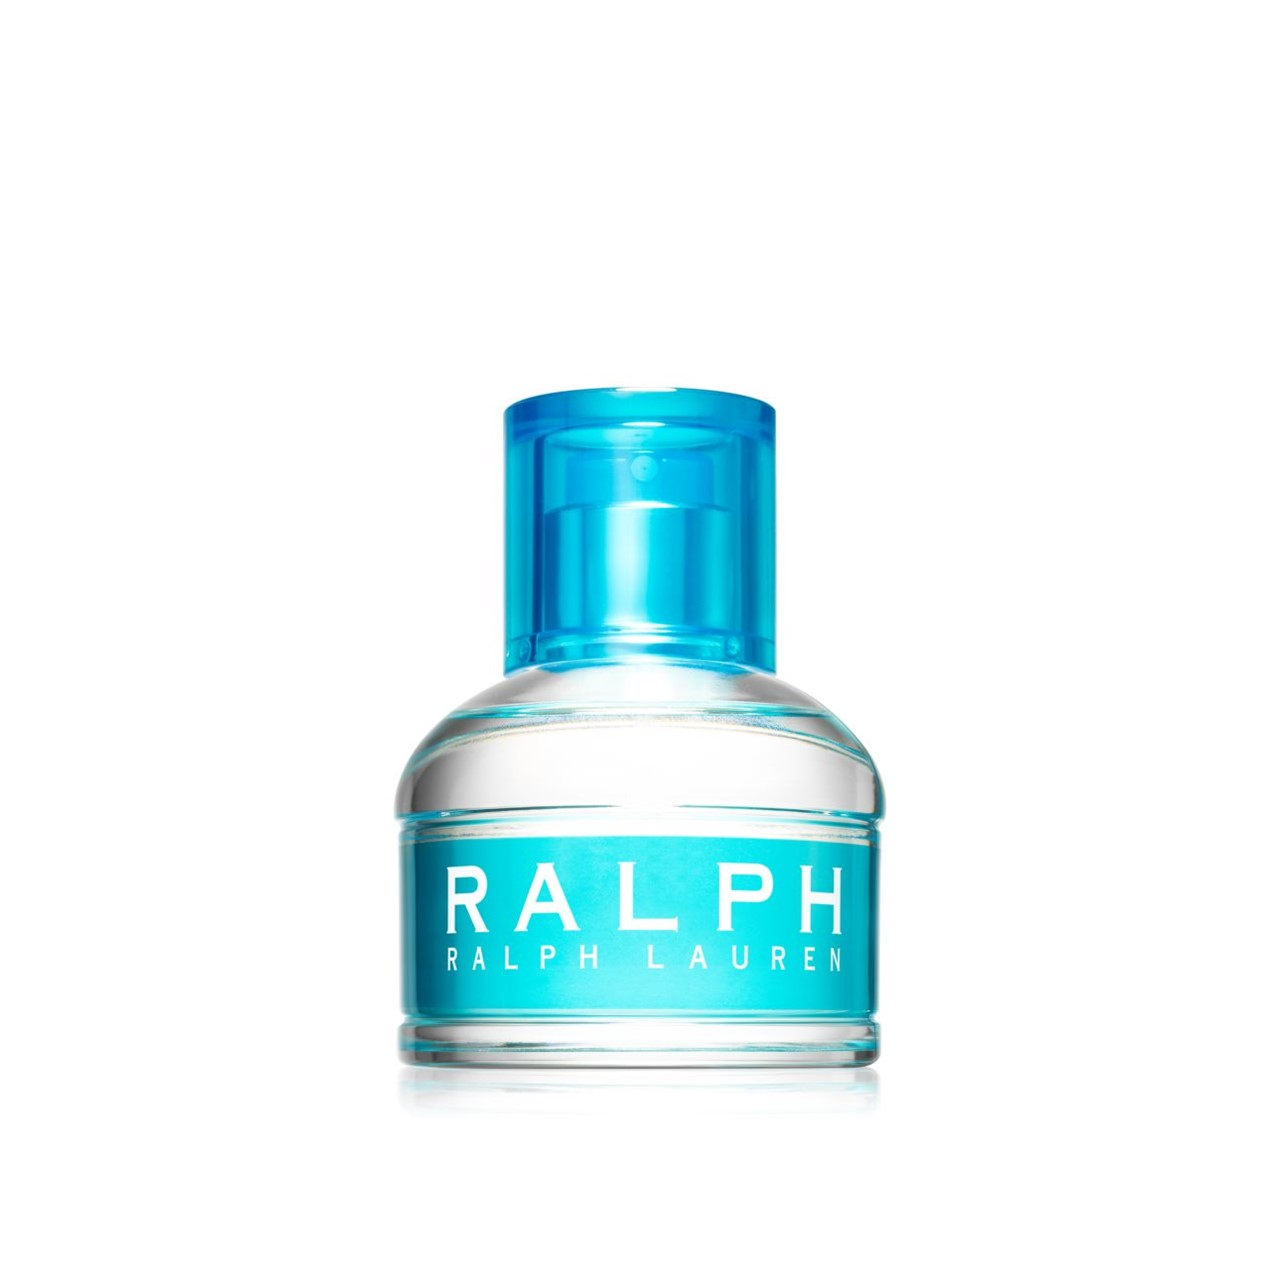 oz) USA de (1.0fl Buy Toilette 30ml Ralph Lauren Eau Ralph ·